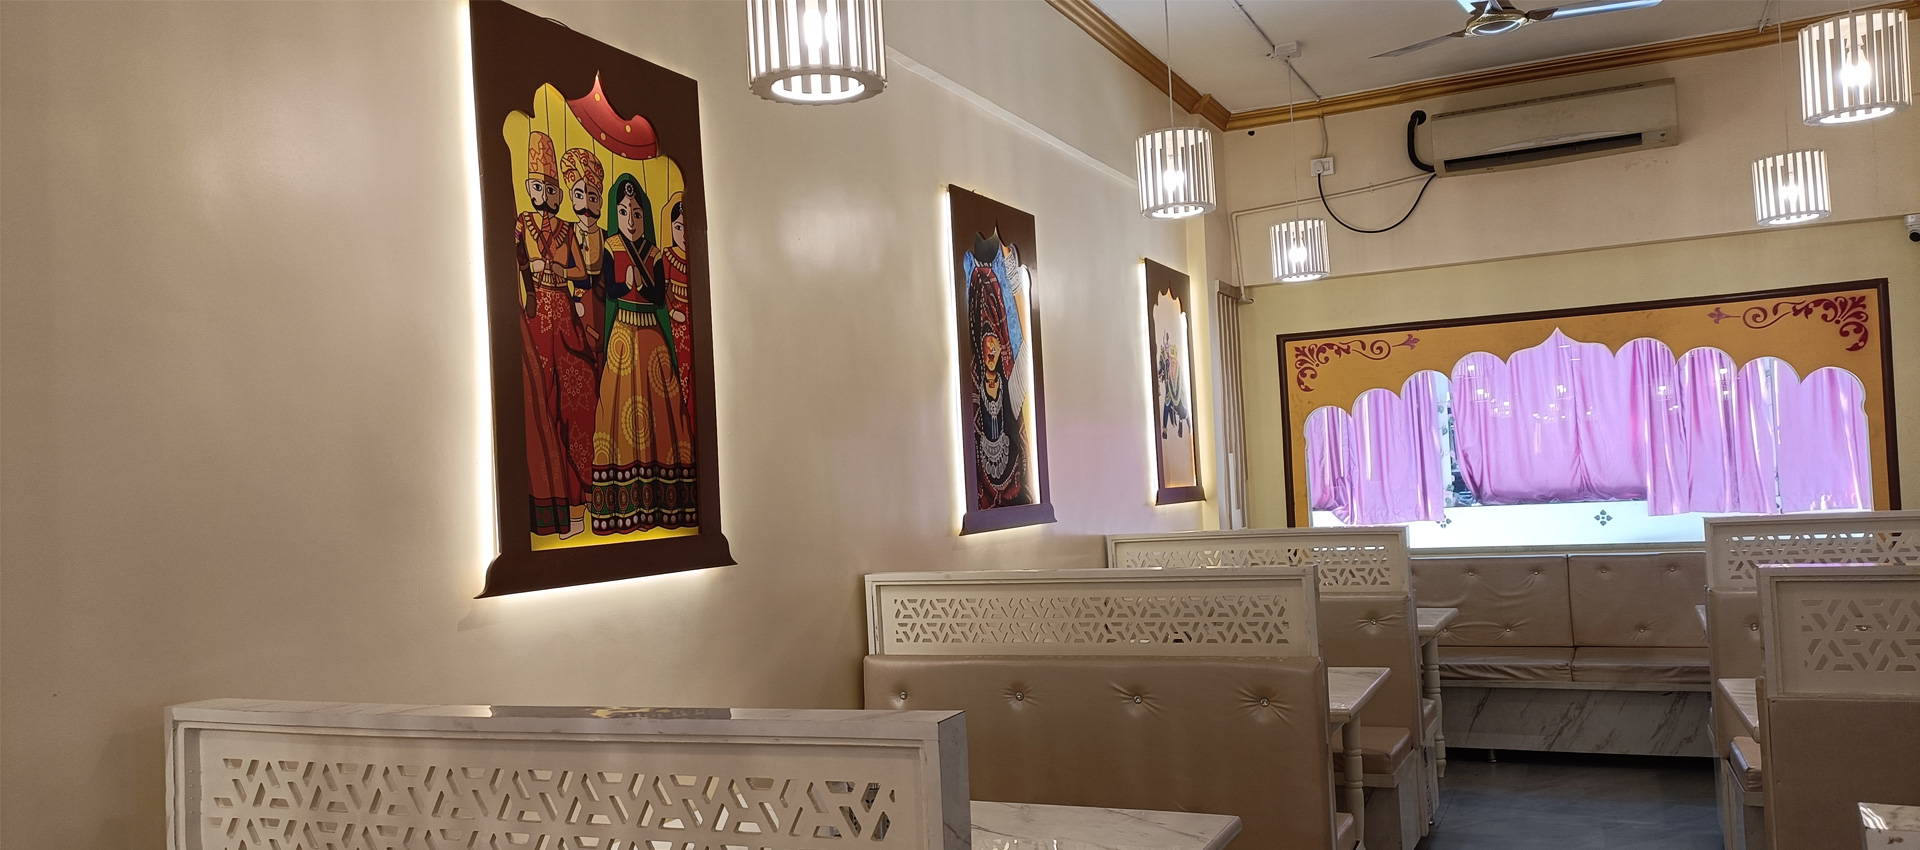 Rajwadi Gaurav Restaurant